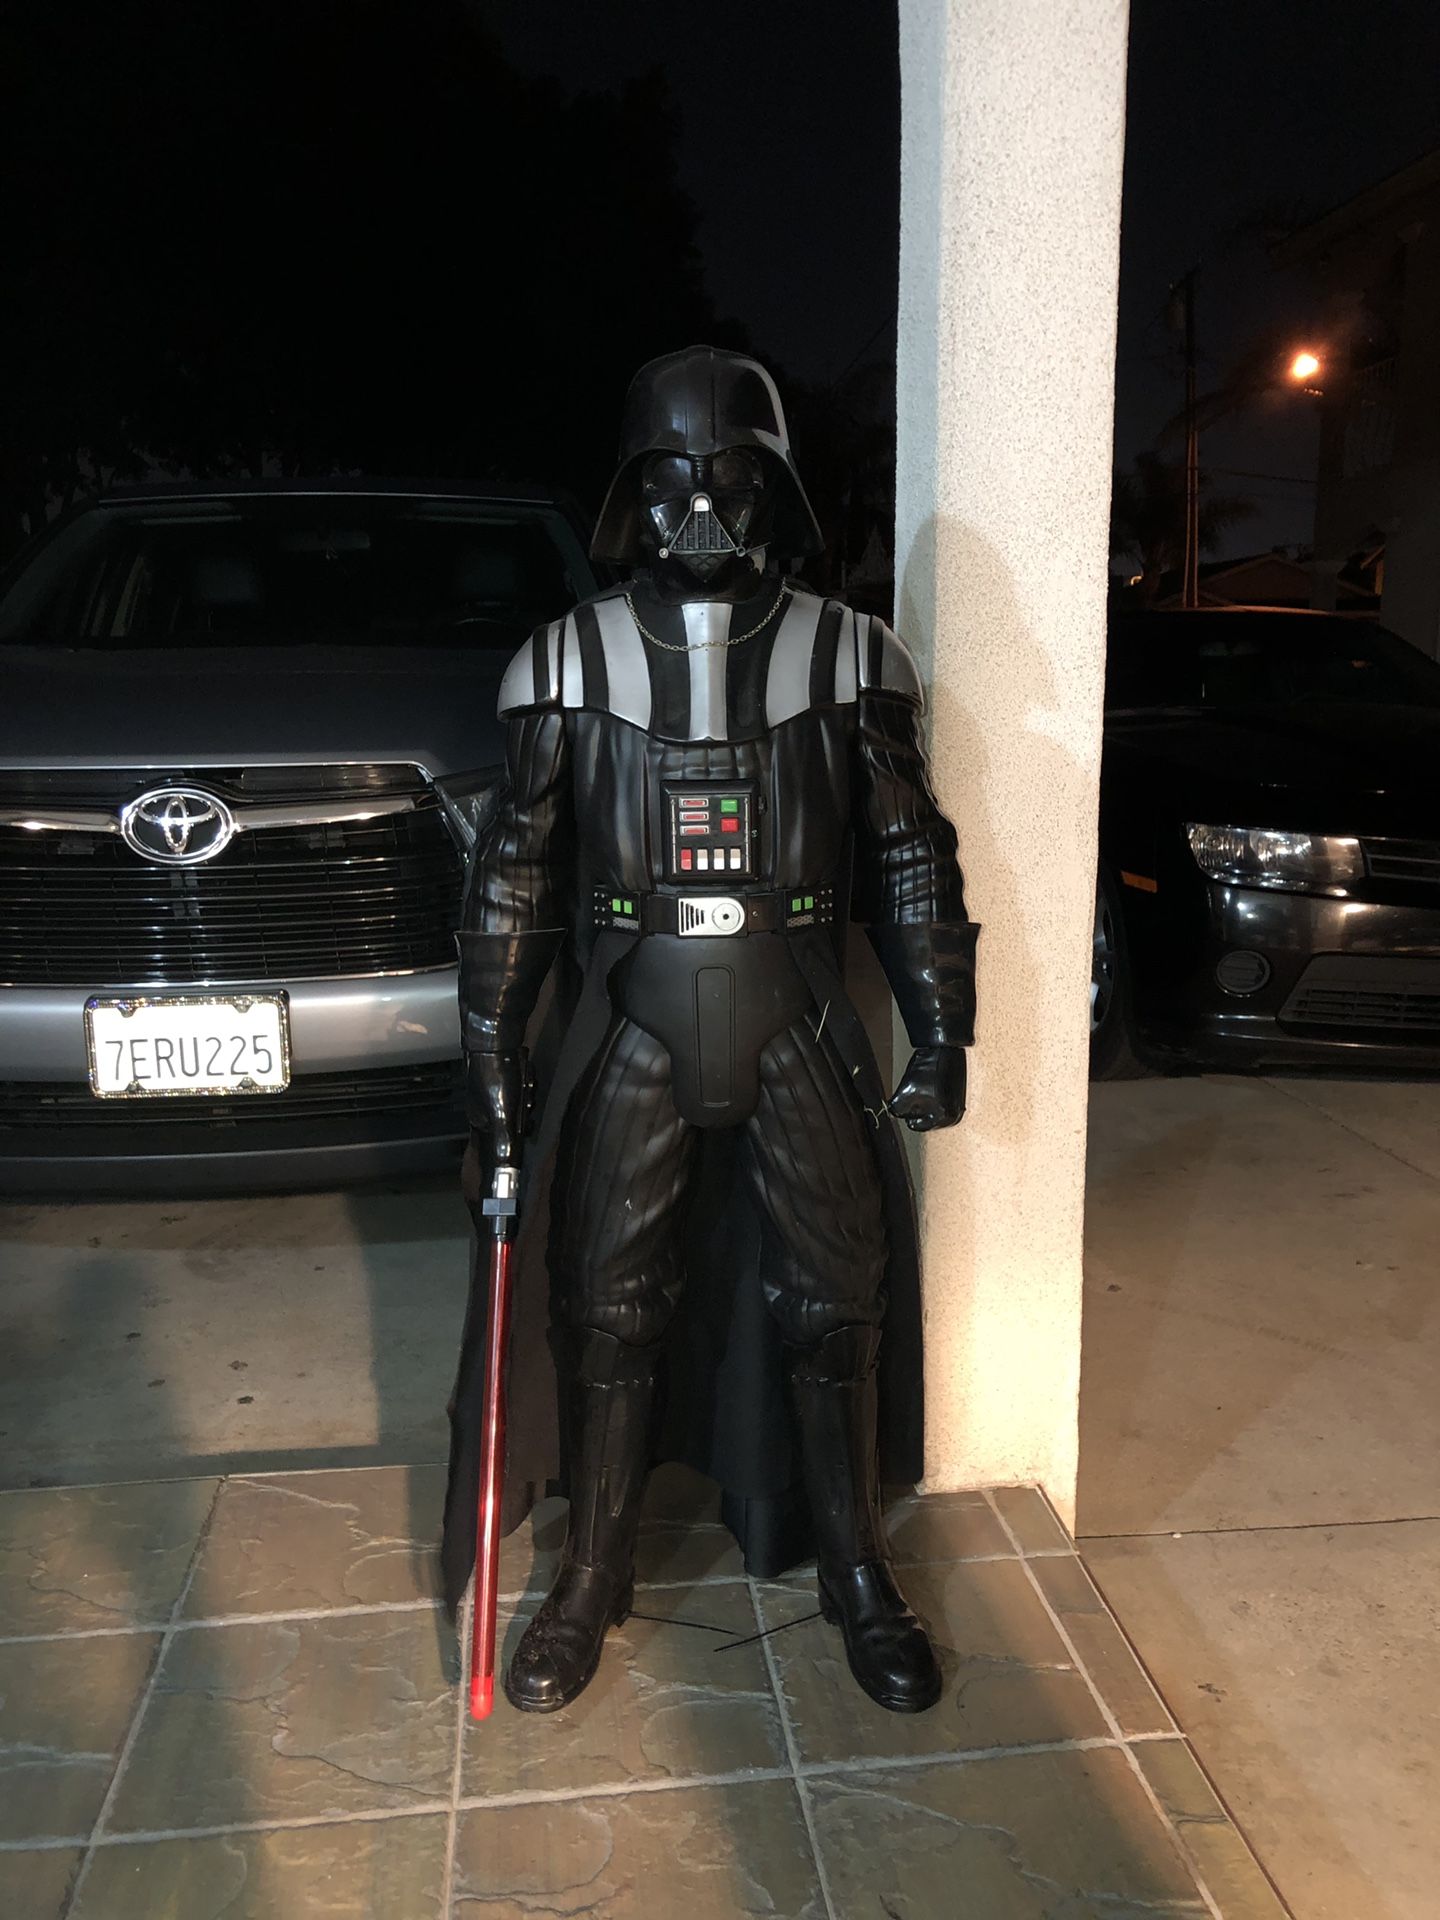 Darth Vader 4ft tall Talking Action Figure